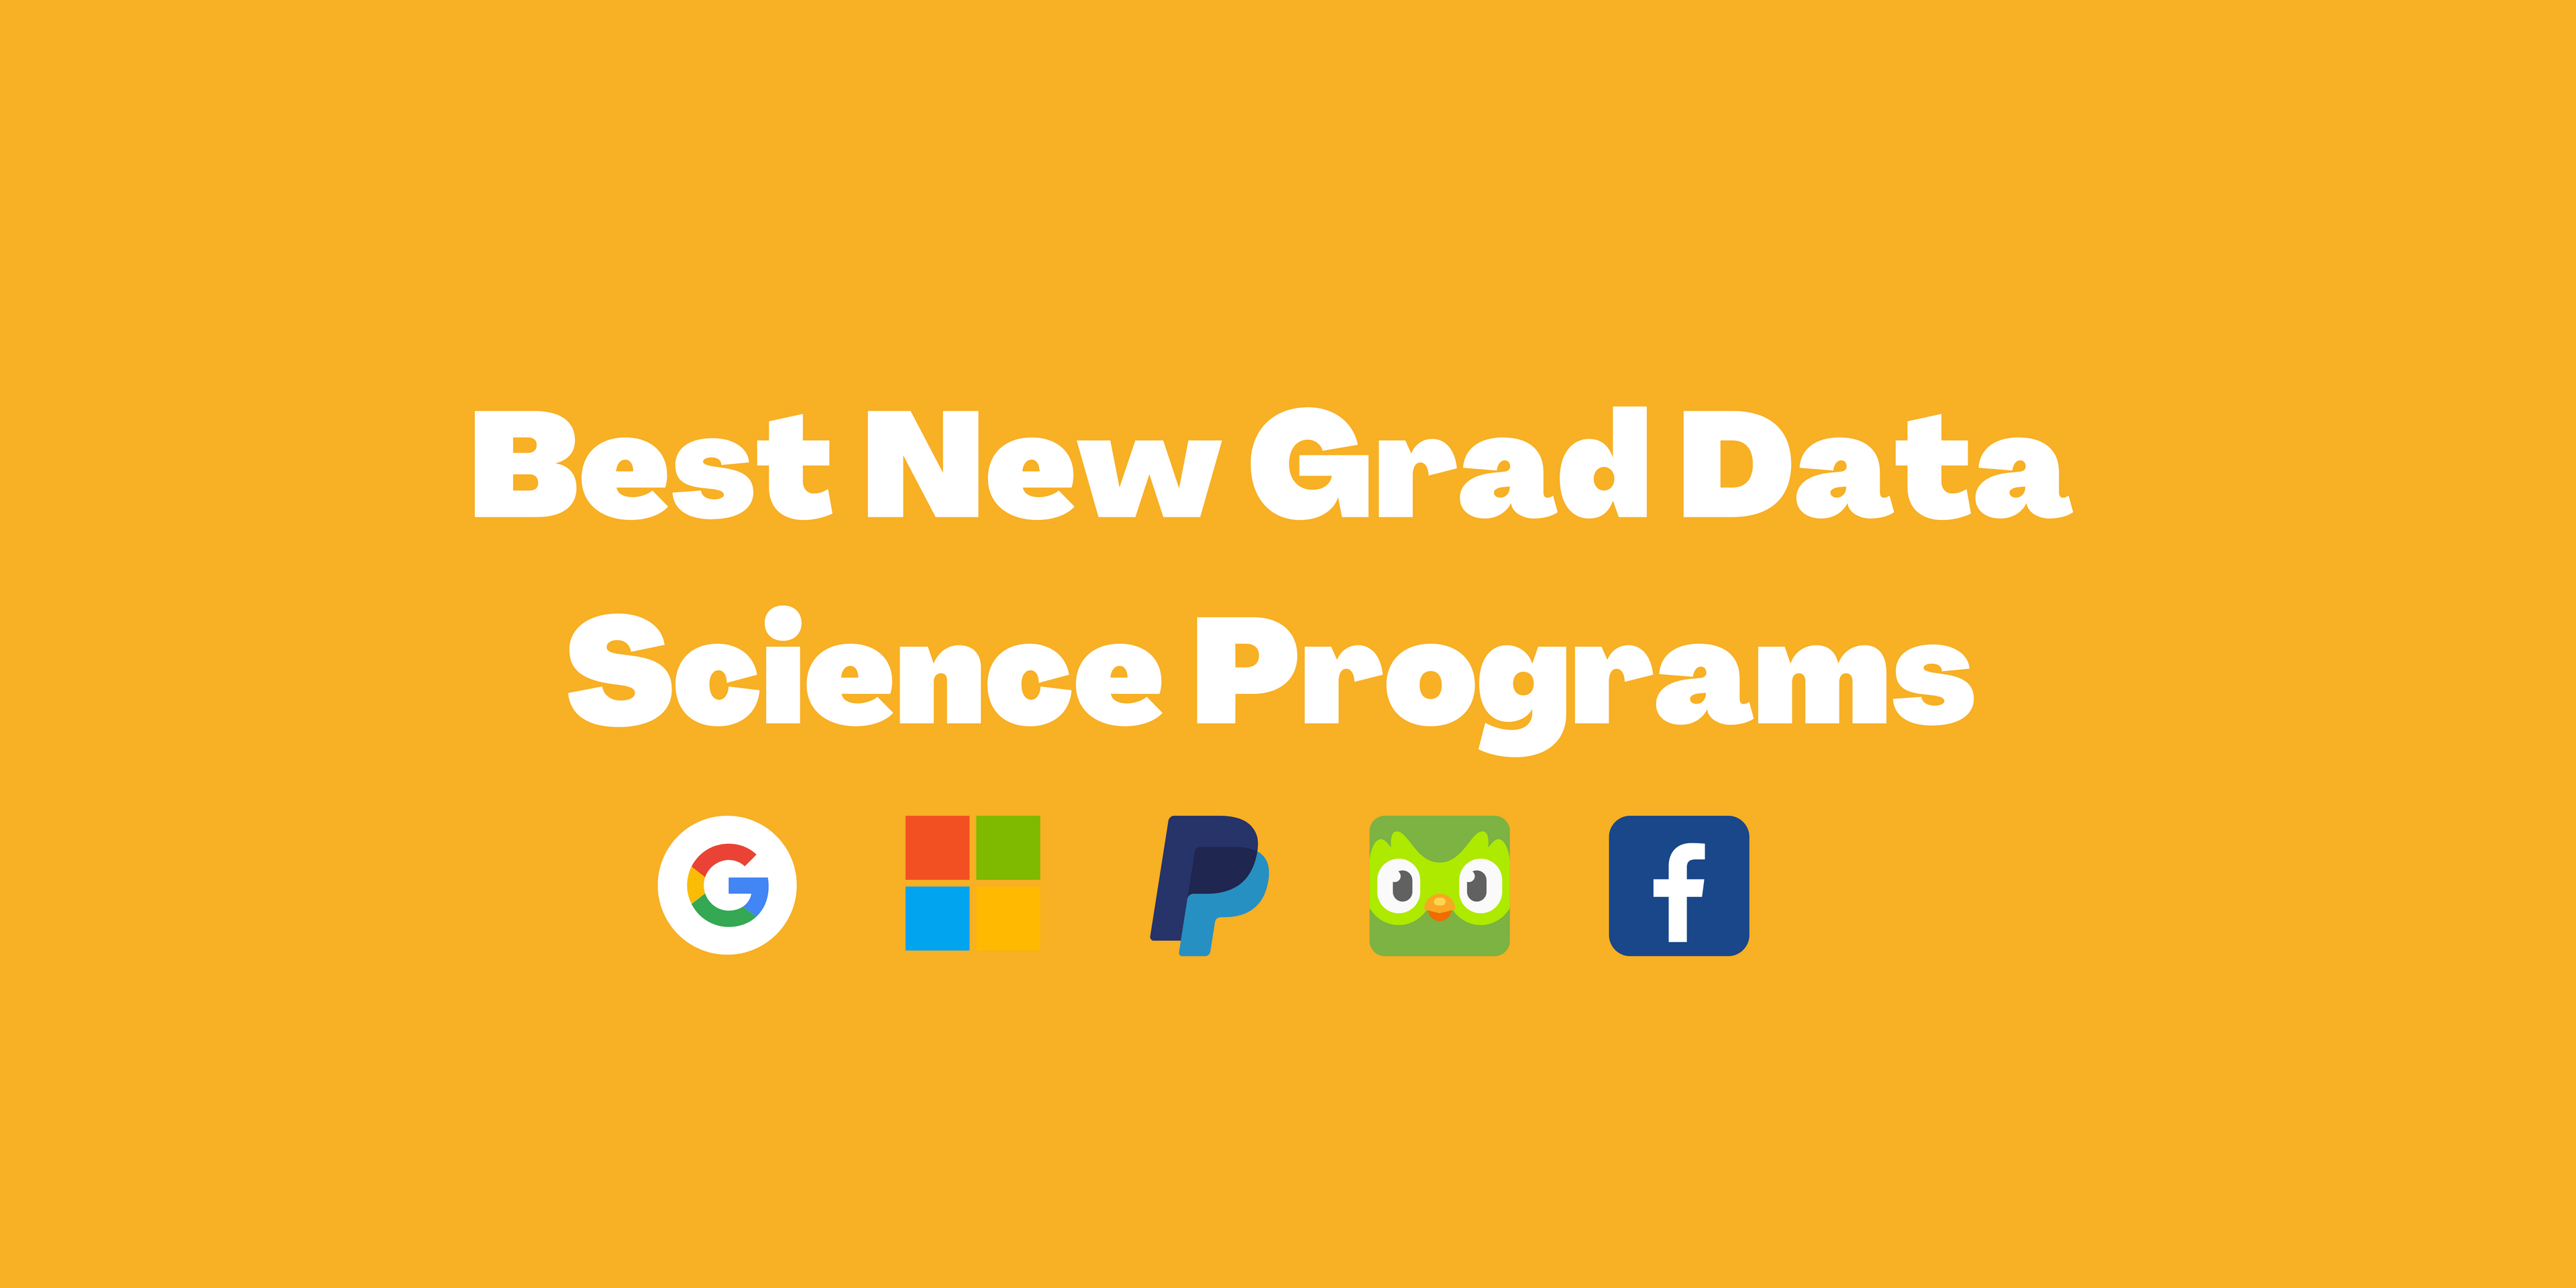 The Best New Grad Data Science Programs